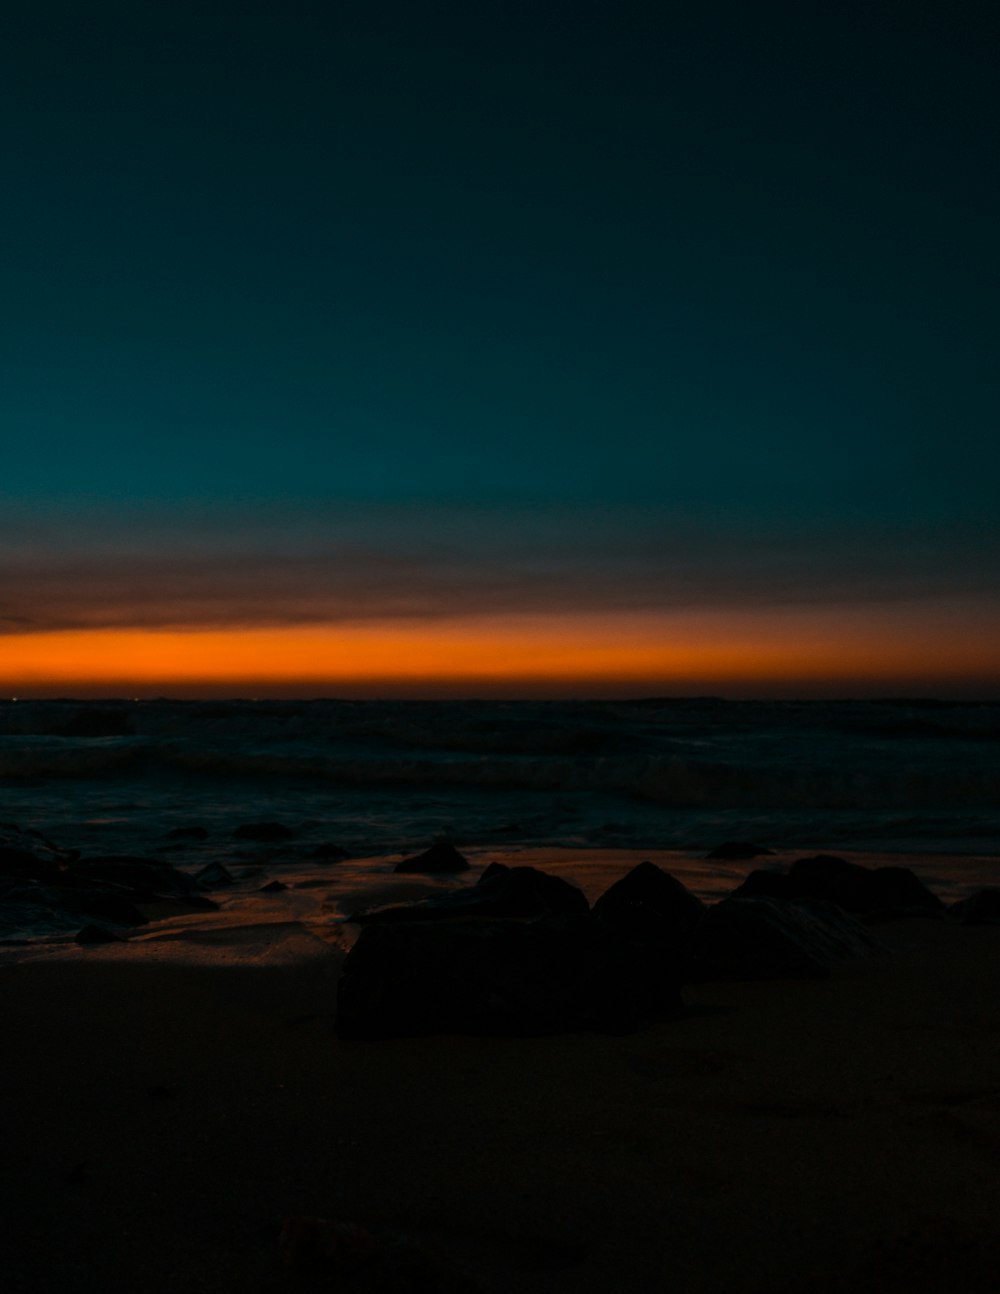 silhouette of rocks on seashore during sunset